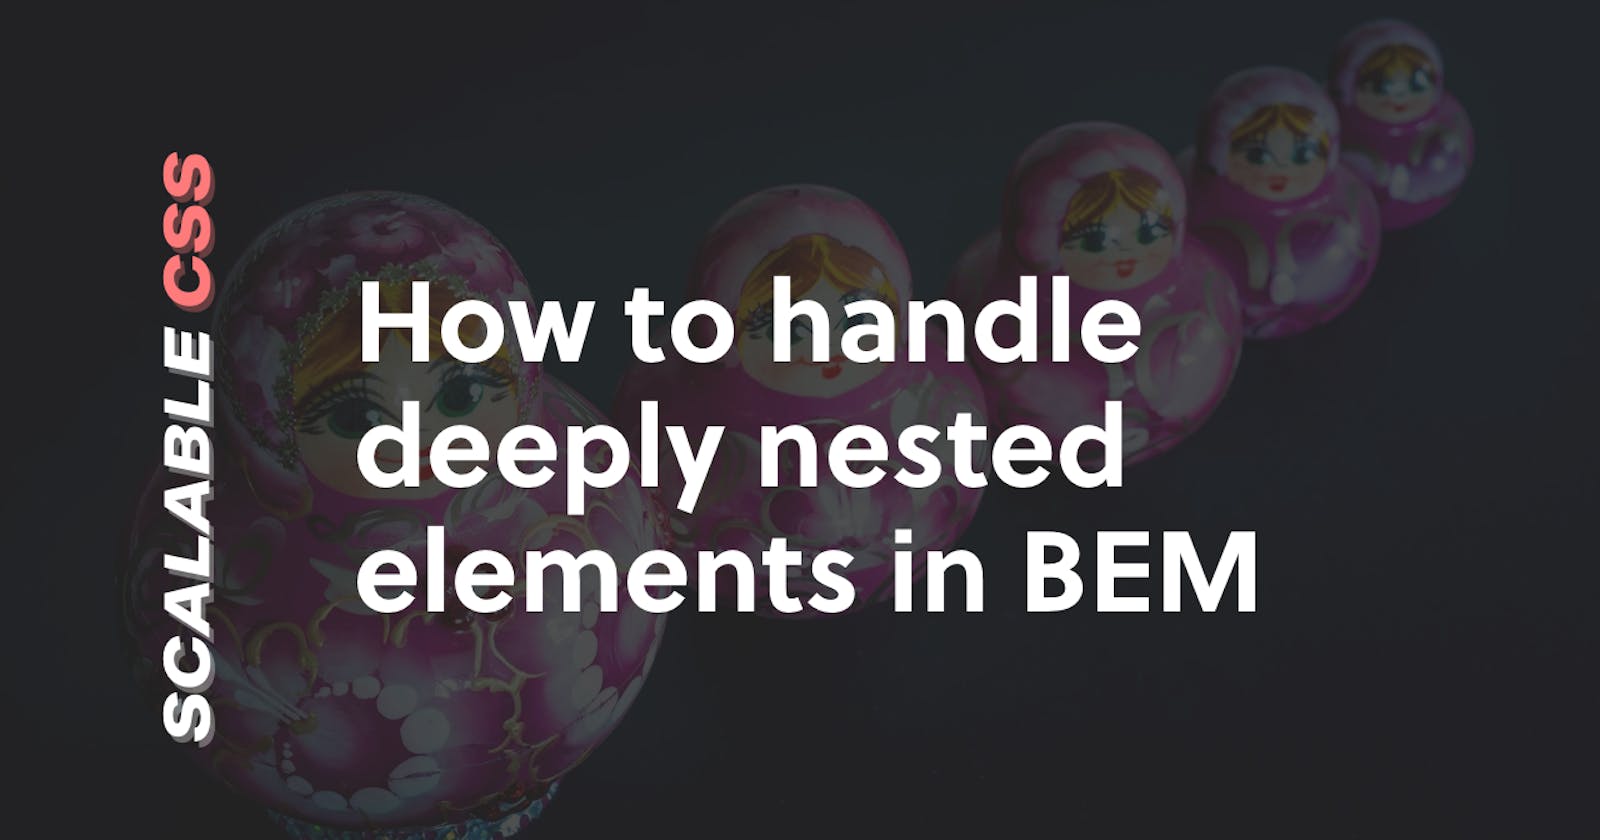 BEM Grandchildren: How To Handle Deeply Nested Elements